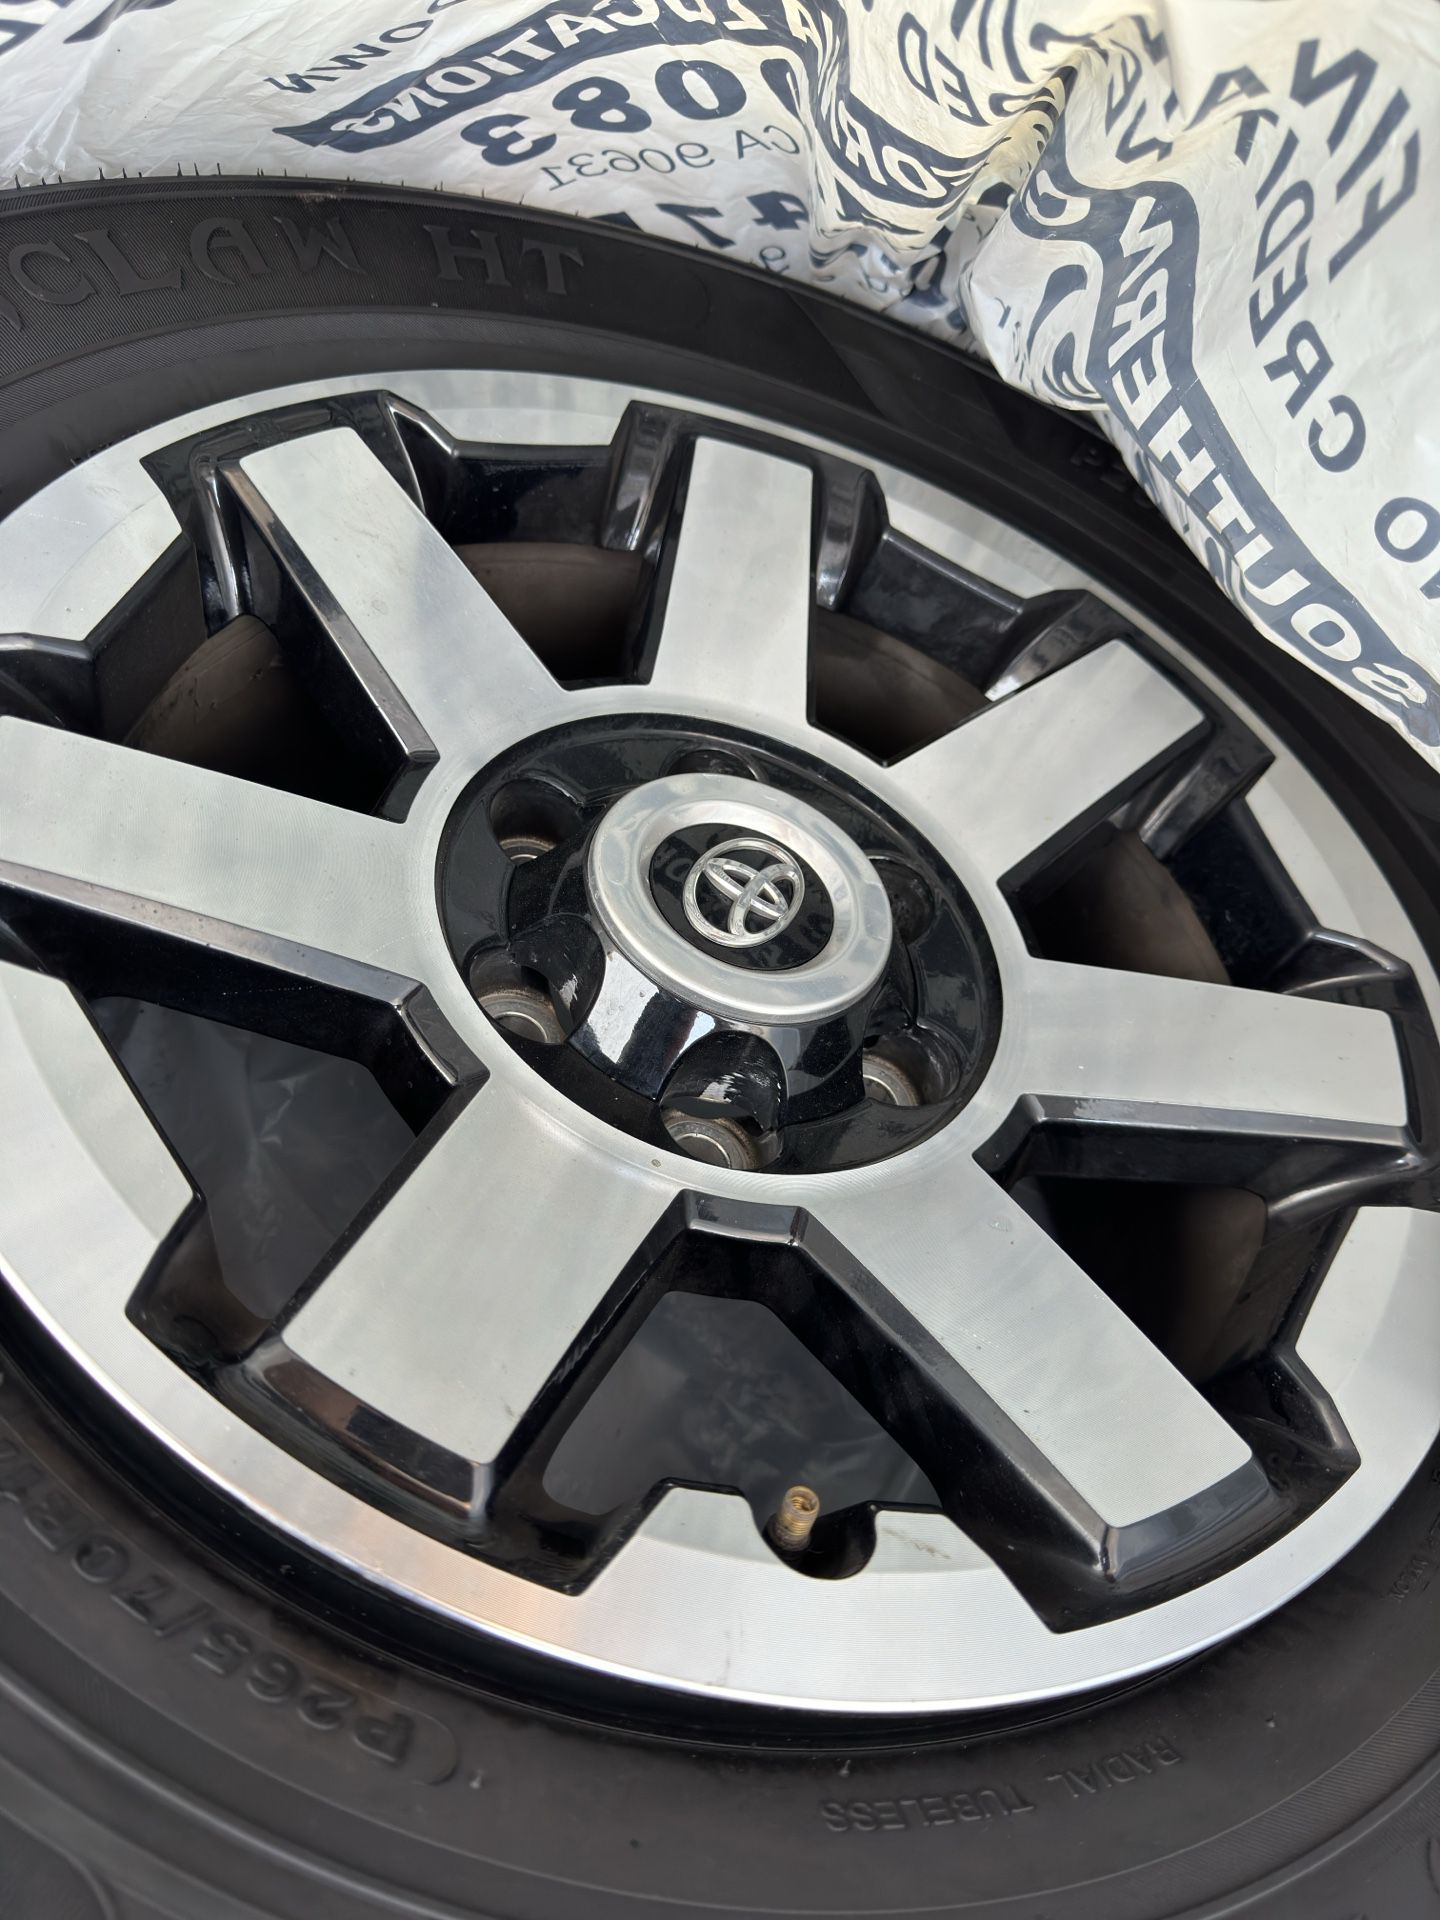 Toyota OEM 4Runner Rims And Tire